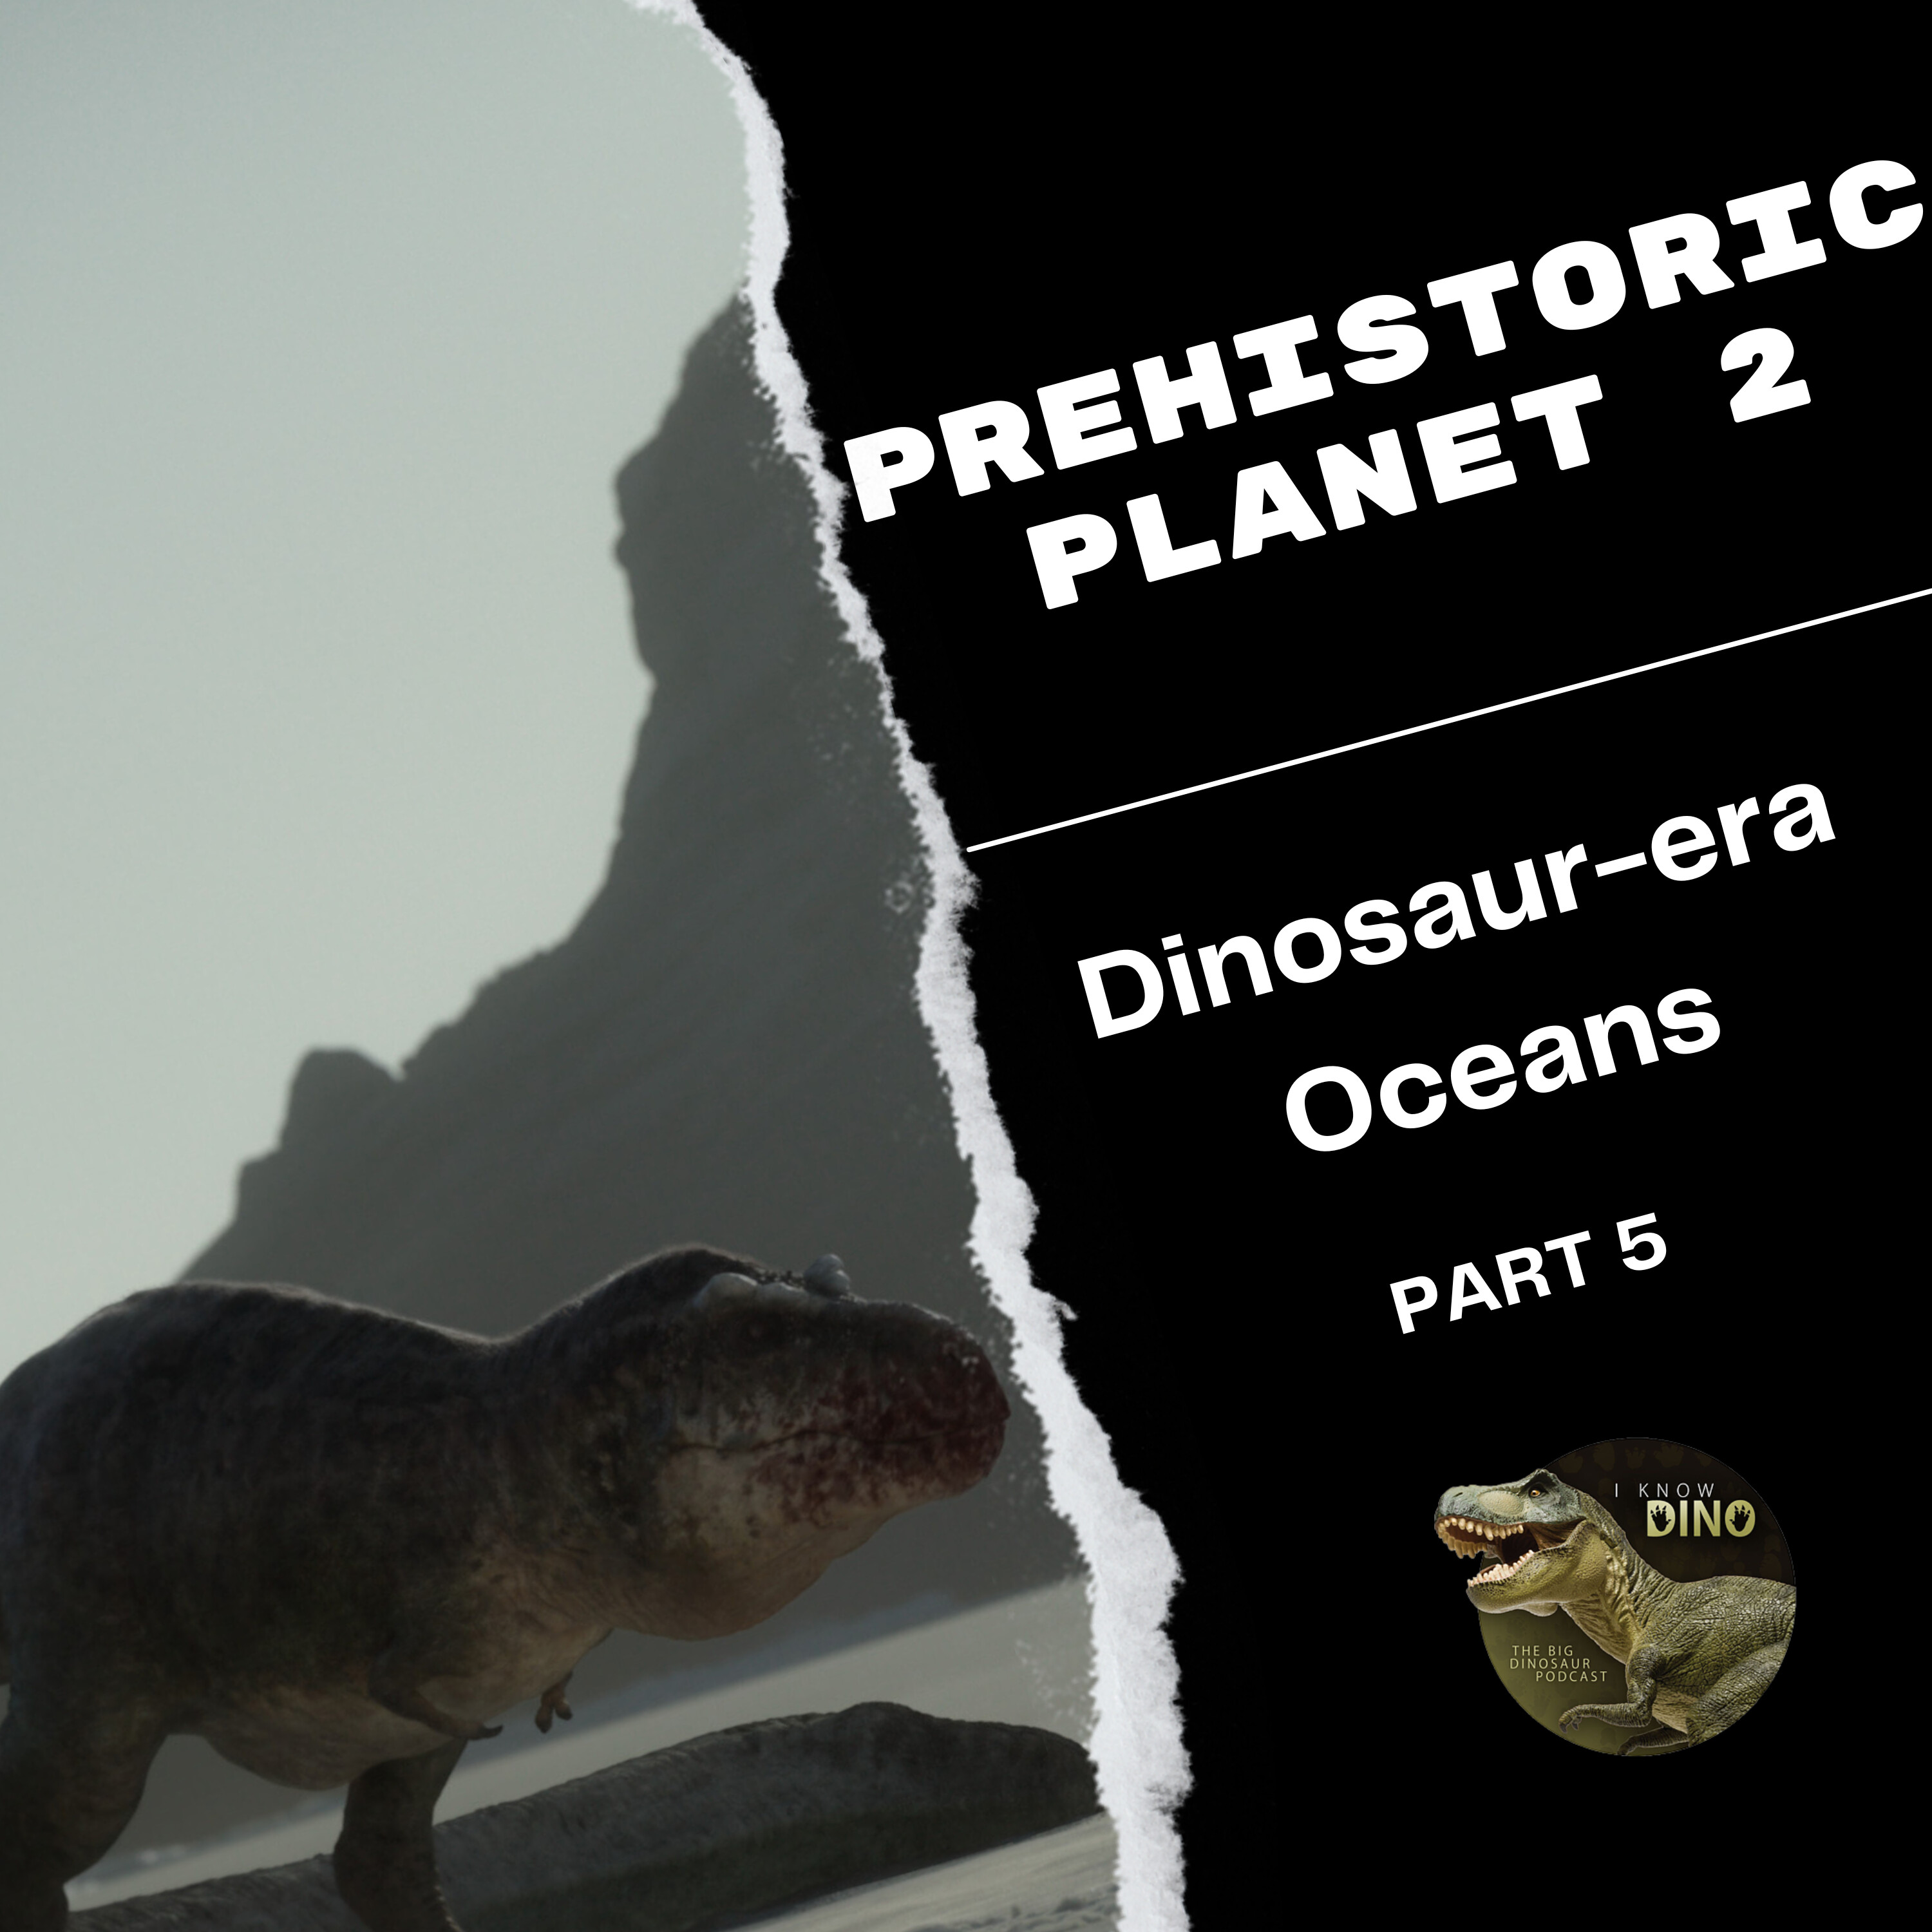 Dinosaur-era Oceans and Darren Naish from Prehistoric Planet 2